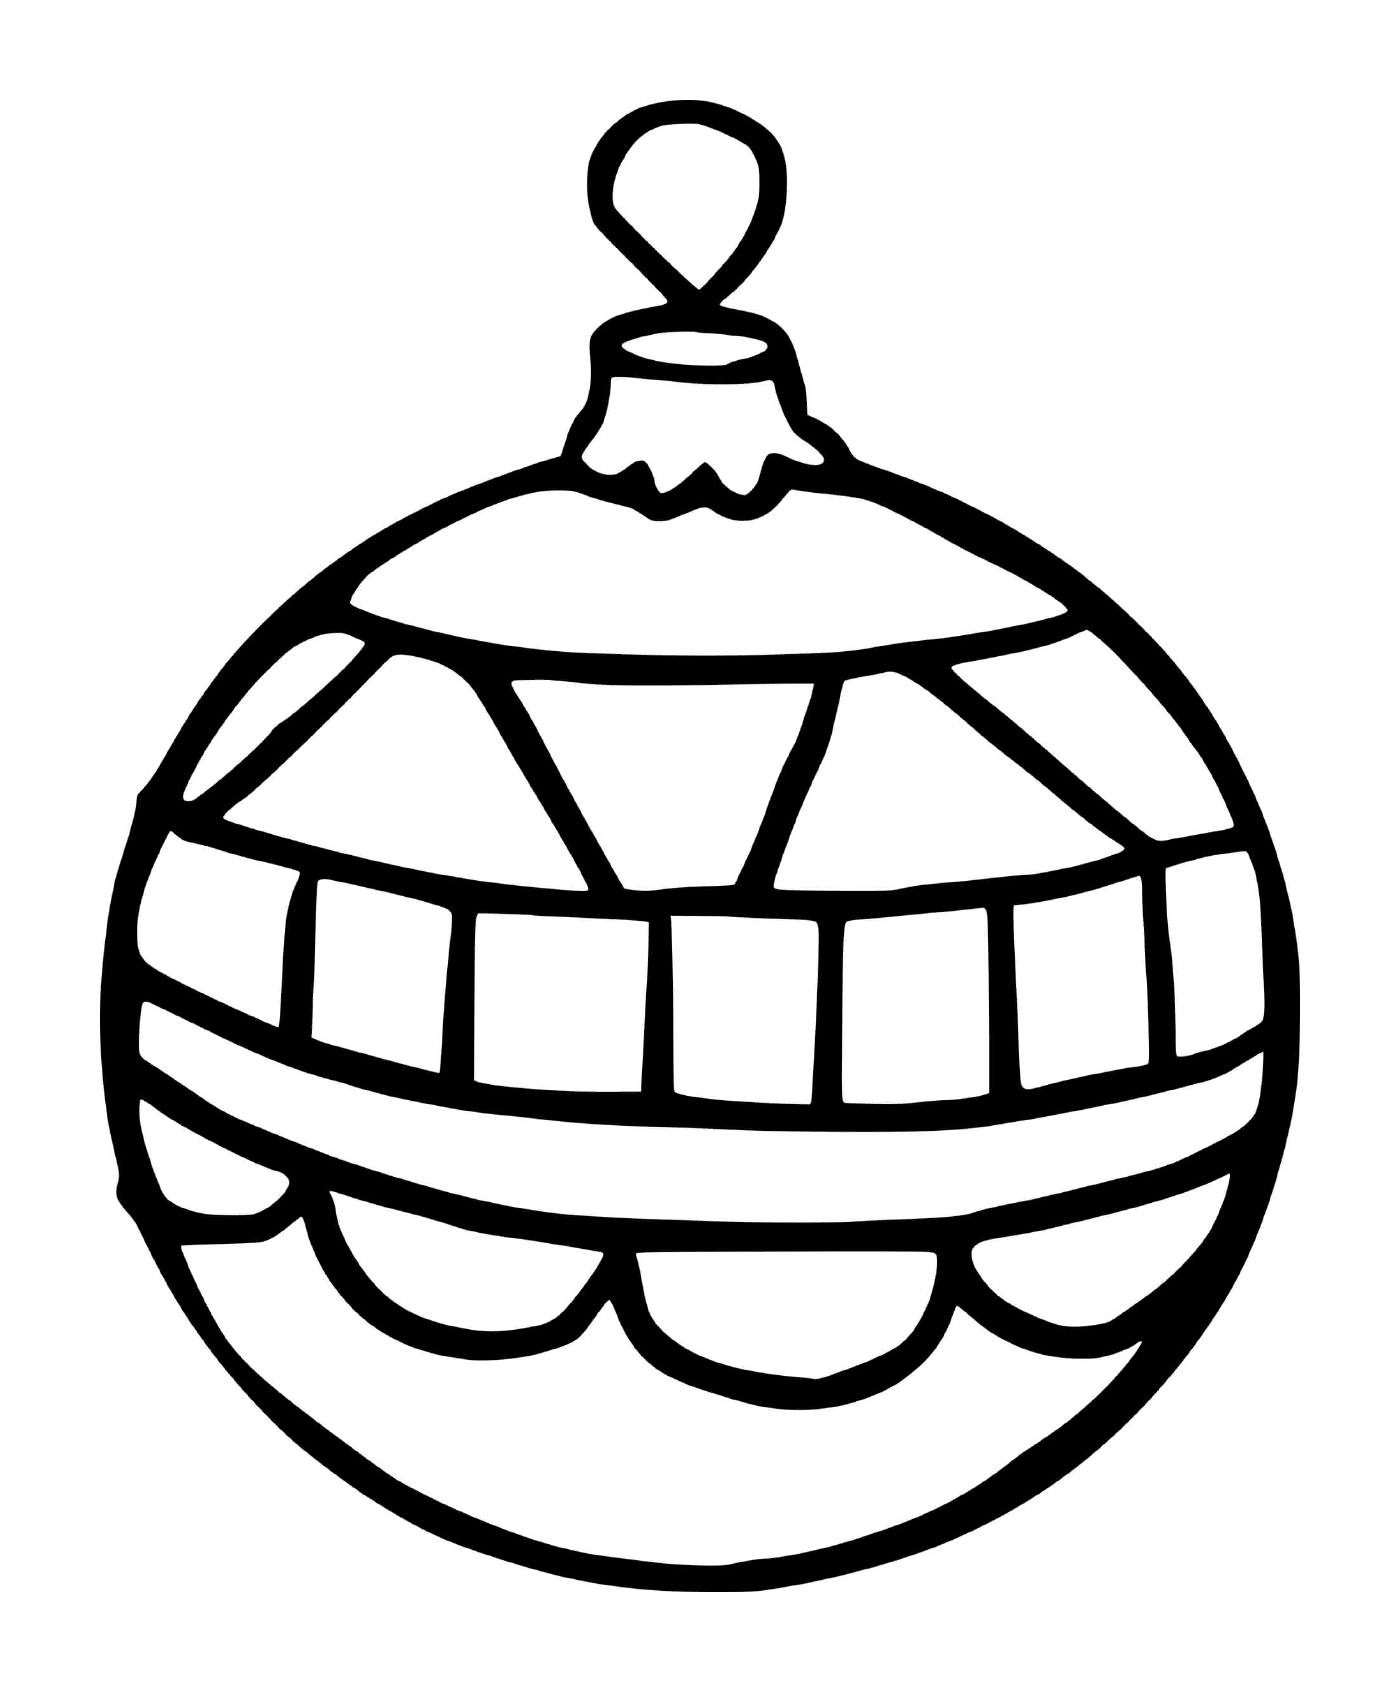  A Christmas ball for a tree 